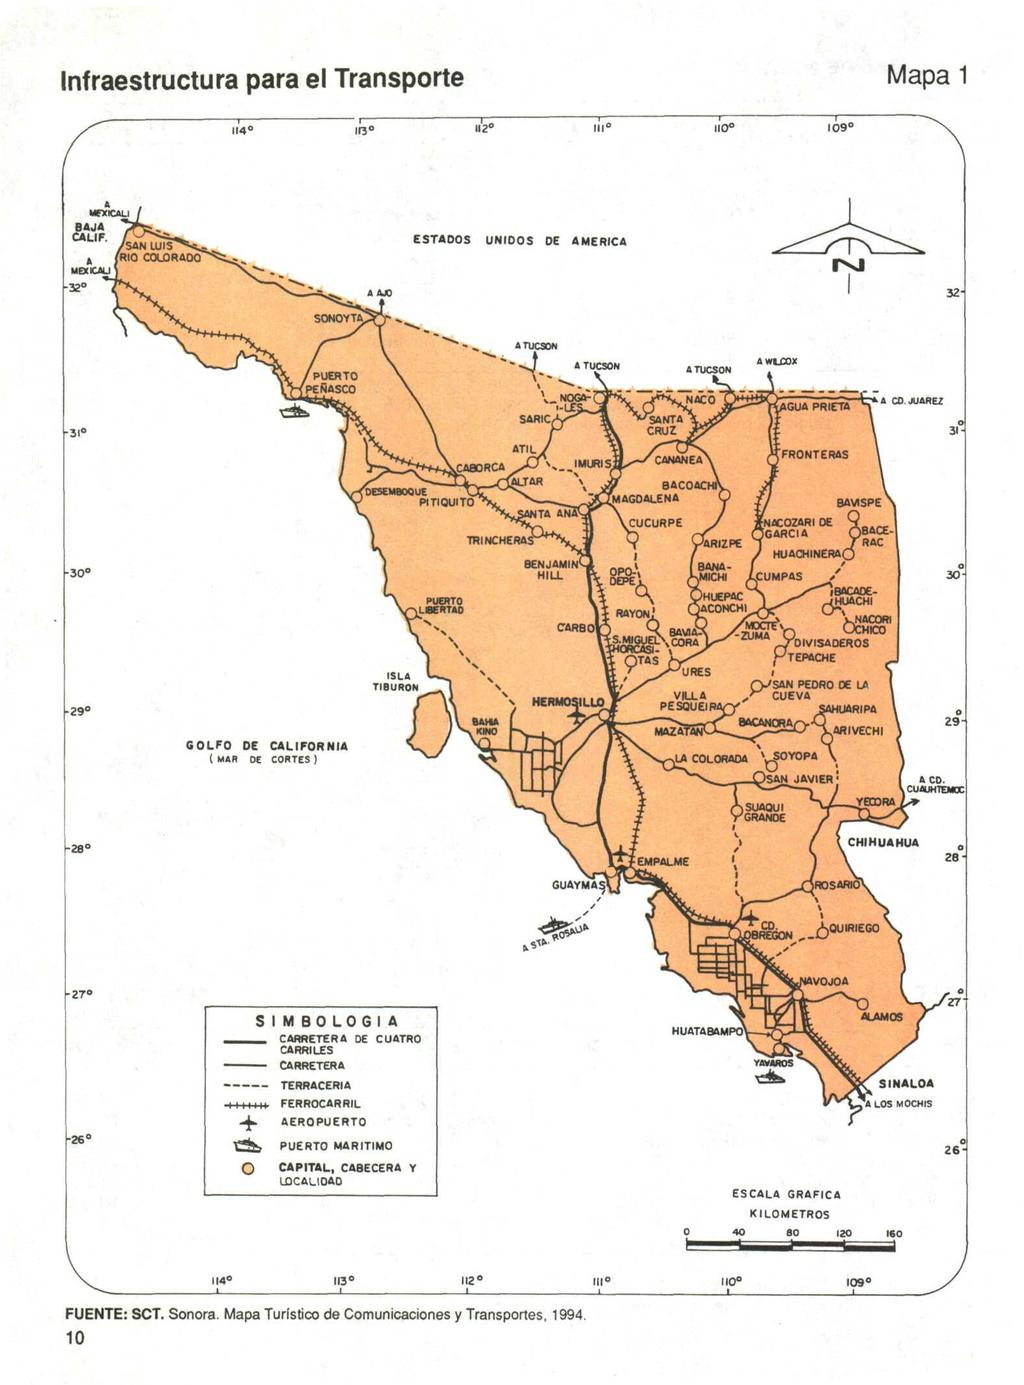 Infraestructura para el Transporte Mapa 1 114 113" III" 9 A MEXICALI BAJA CALIF ESTADOS UNIDOS DE AMERICA SAHUARIPA GOLFO OE CALIFORNIA ( MAR DE CORTES ) "H.